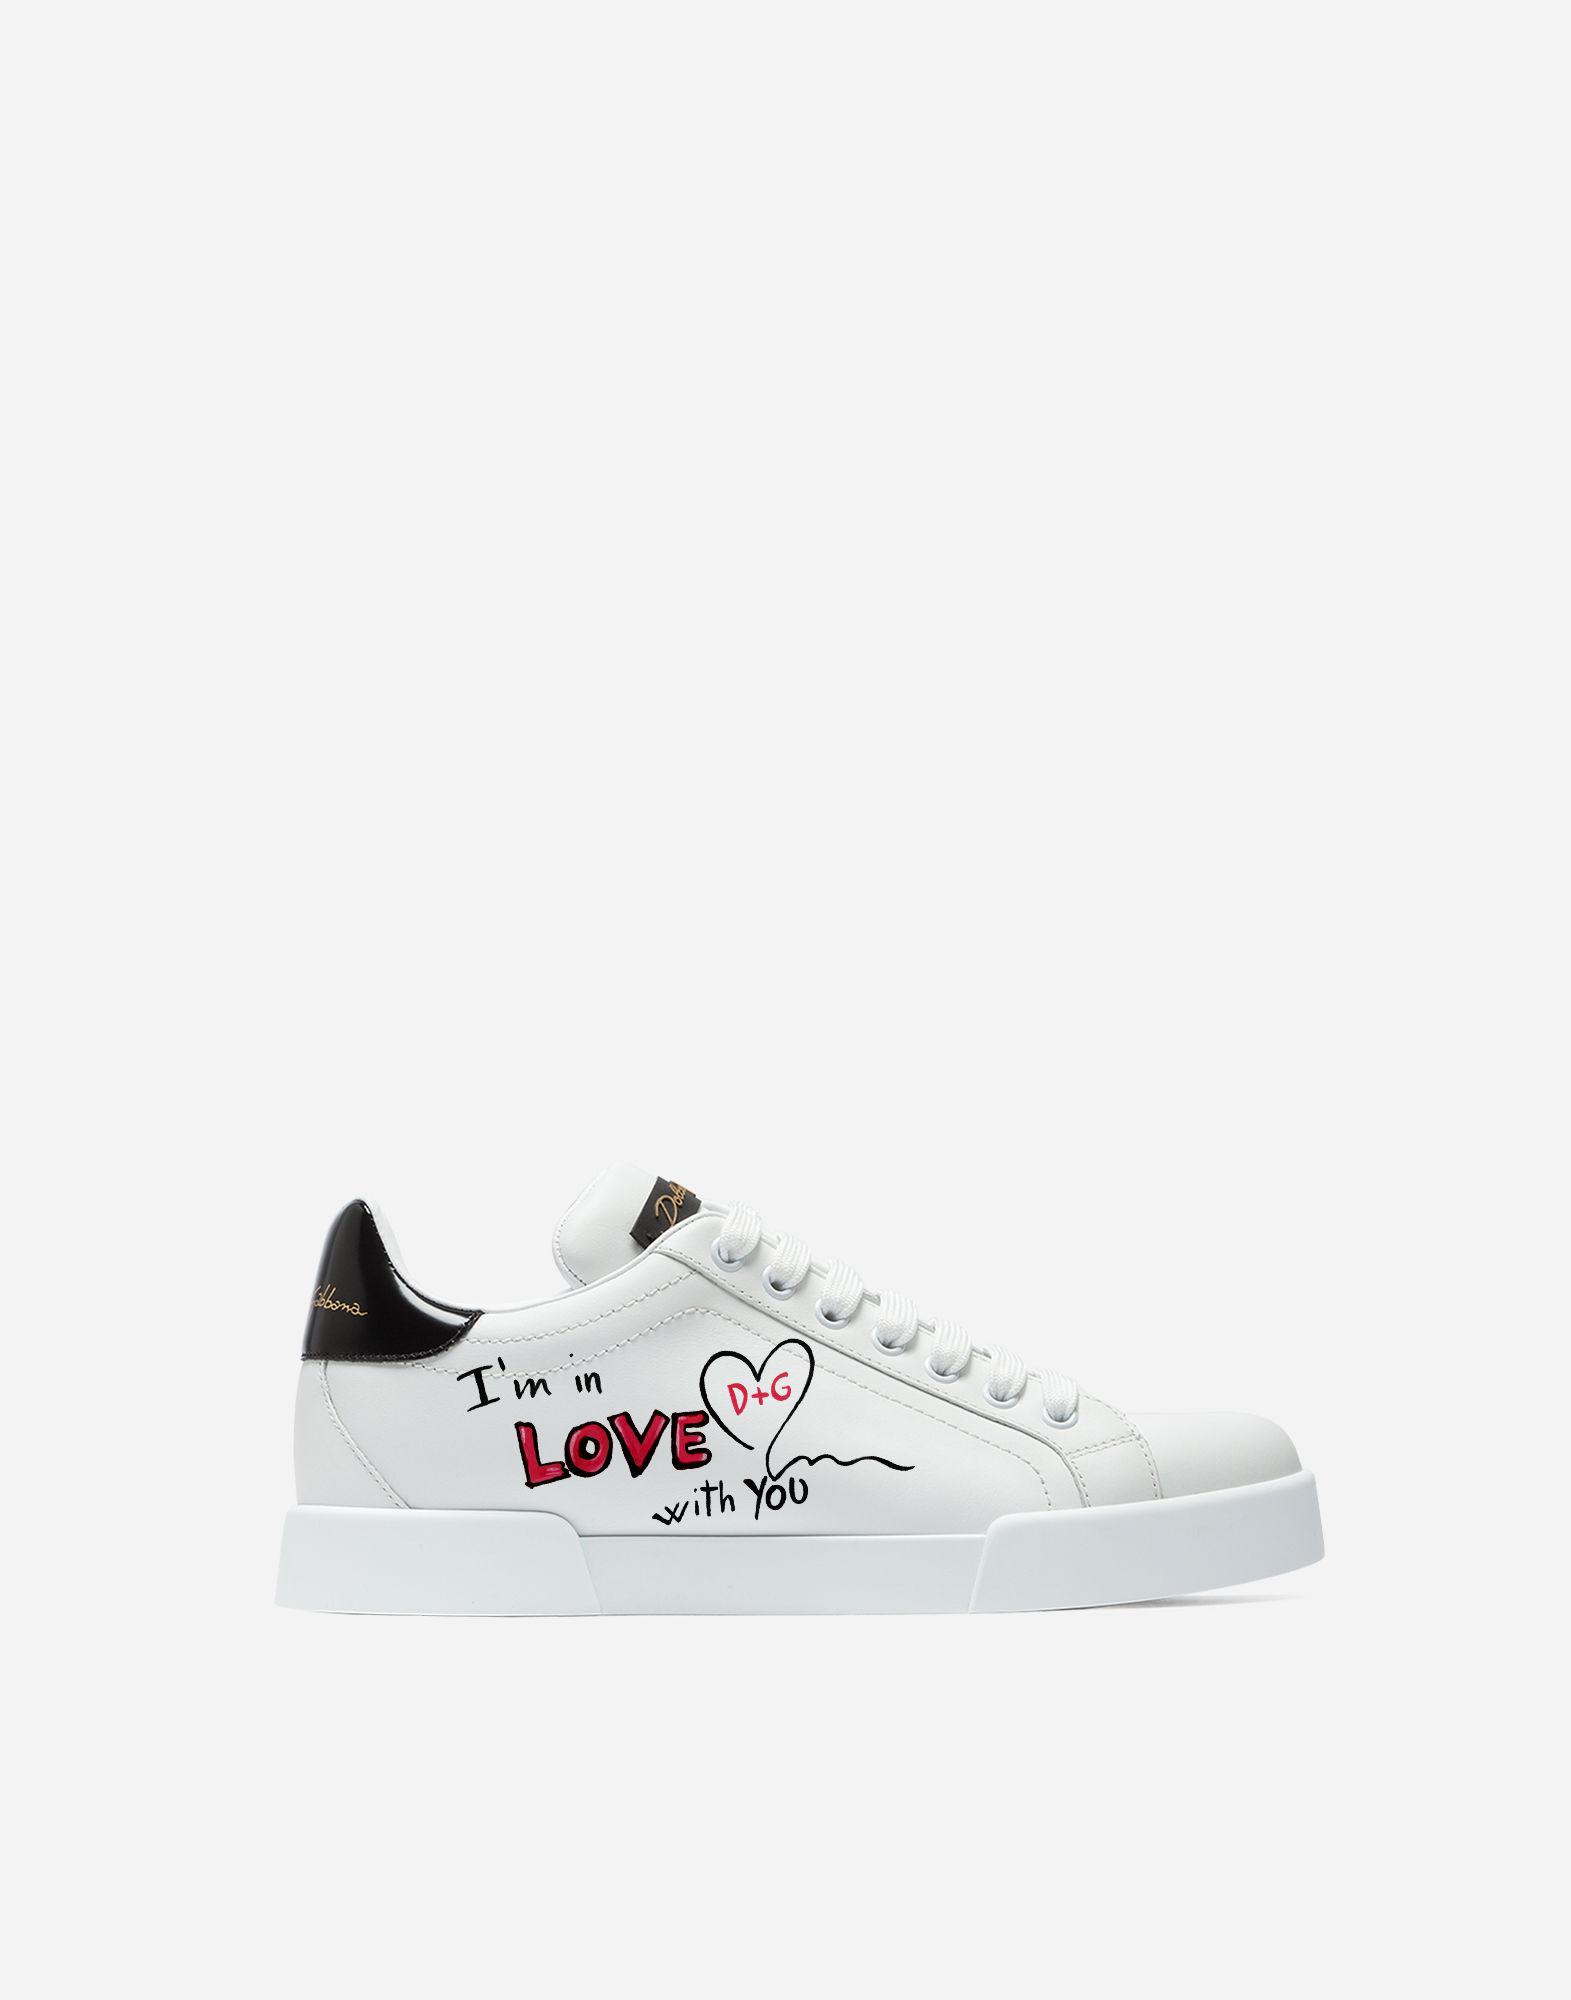 Dolce & Gabbana "i'm In Love" St. Valentine Sneakers in White | Lyst